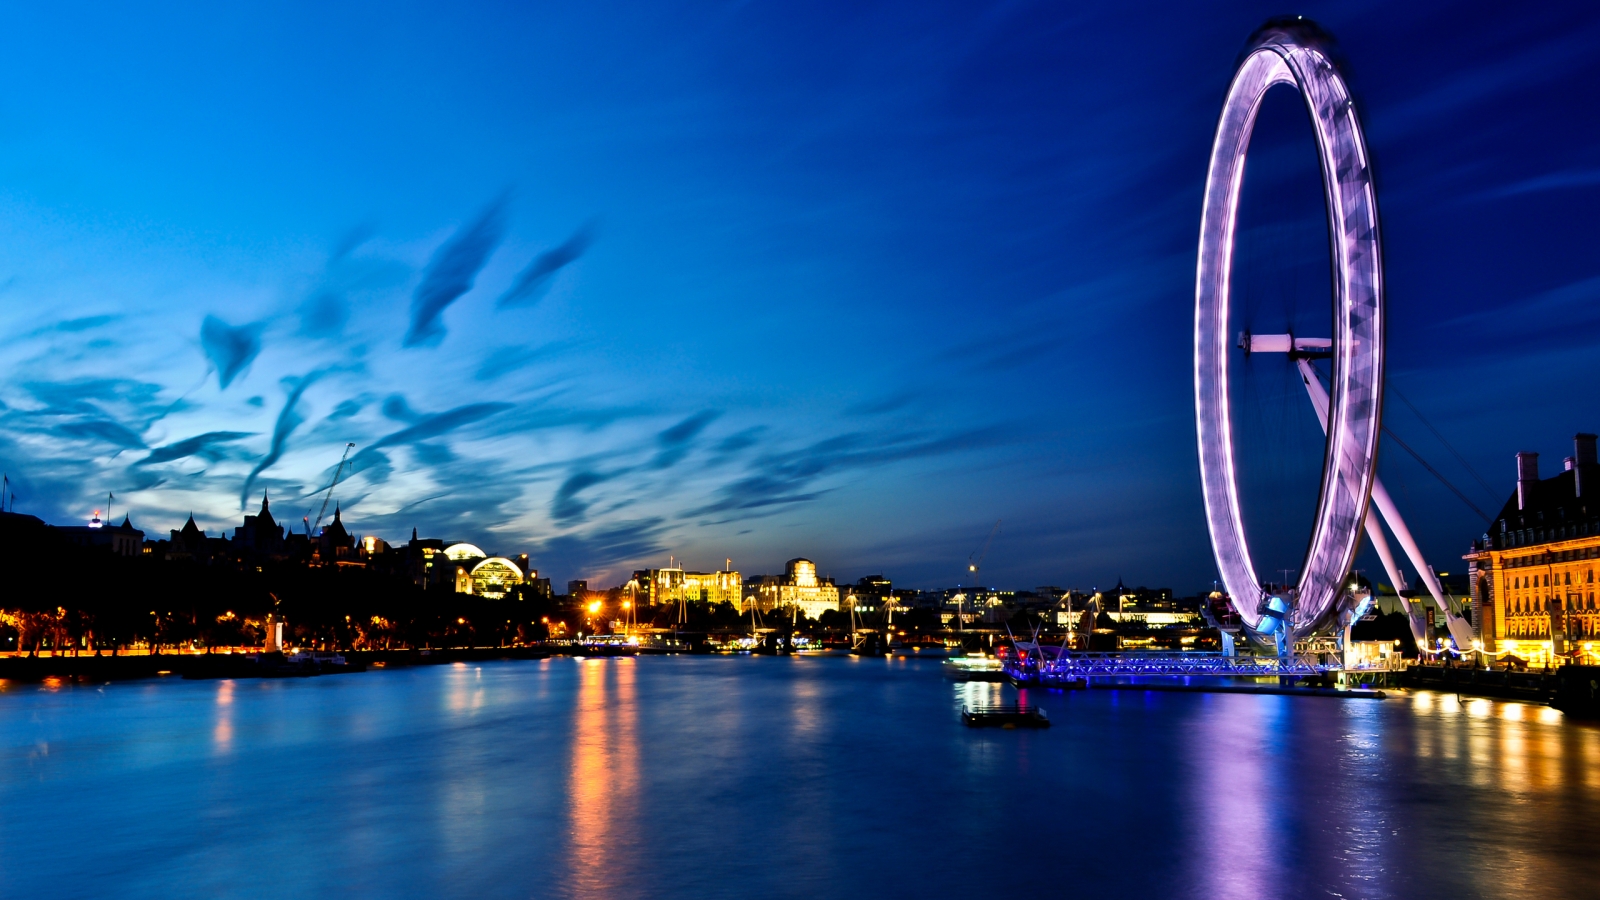 London Eye View for 1600 x 900 HDTV resolution